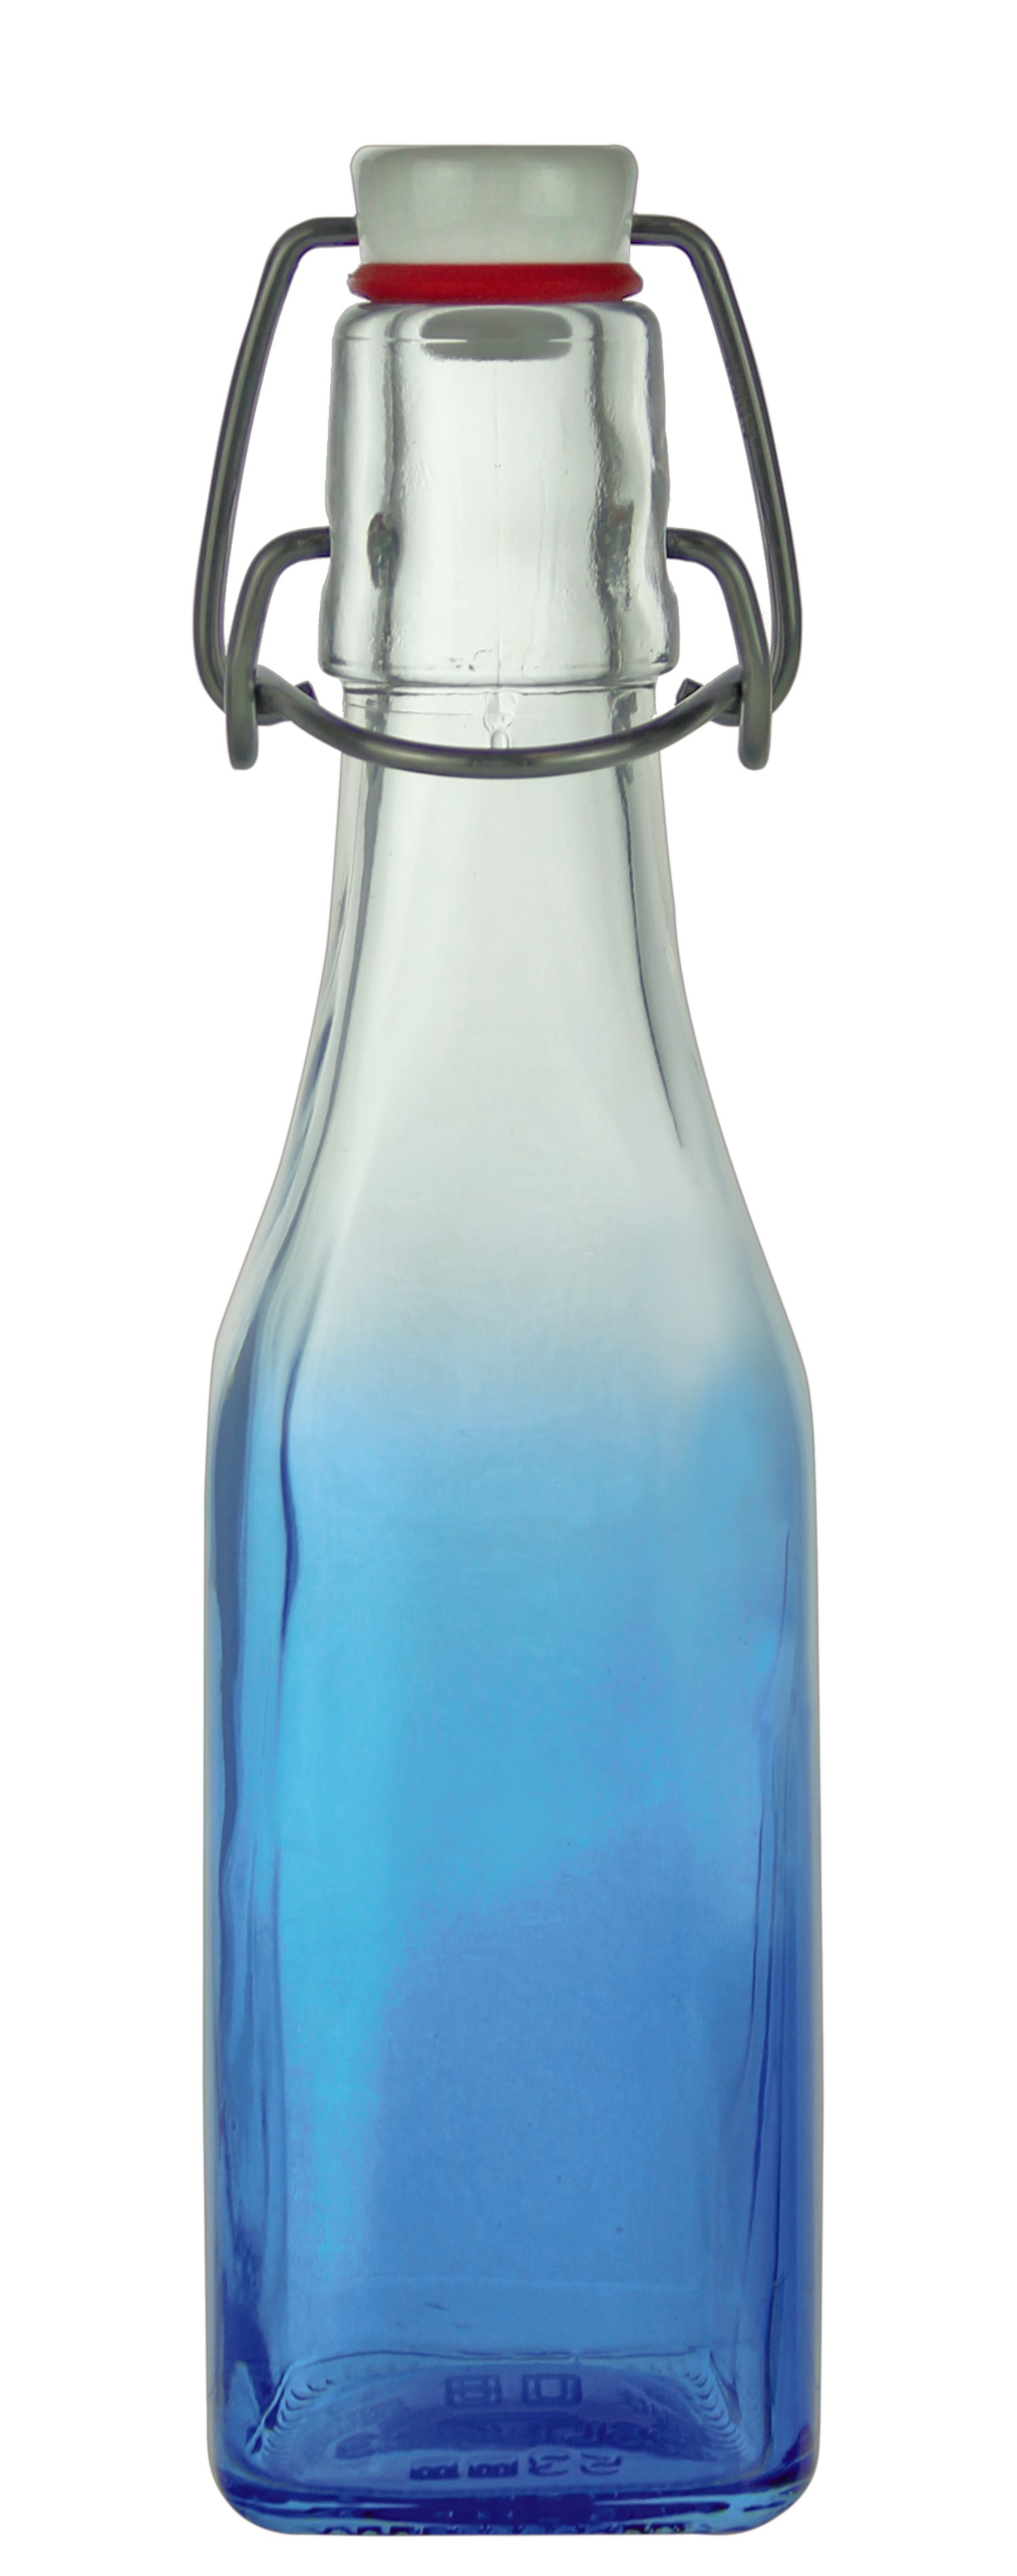 Saftflasche Myrex 4you blau, 250 ml